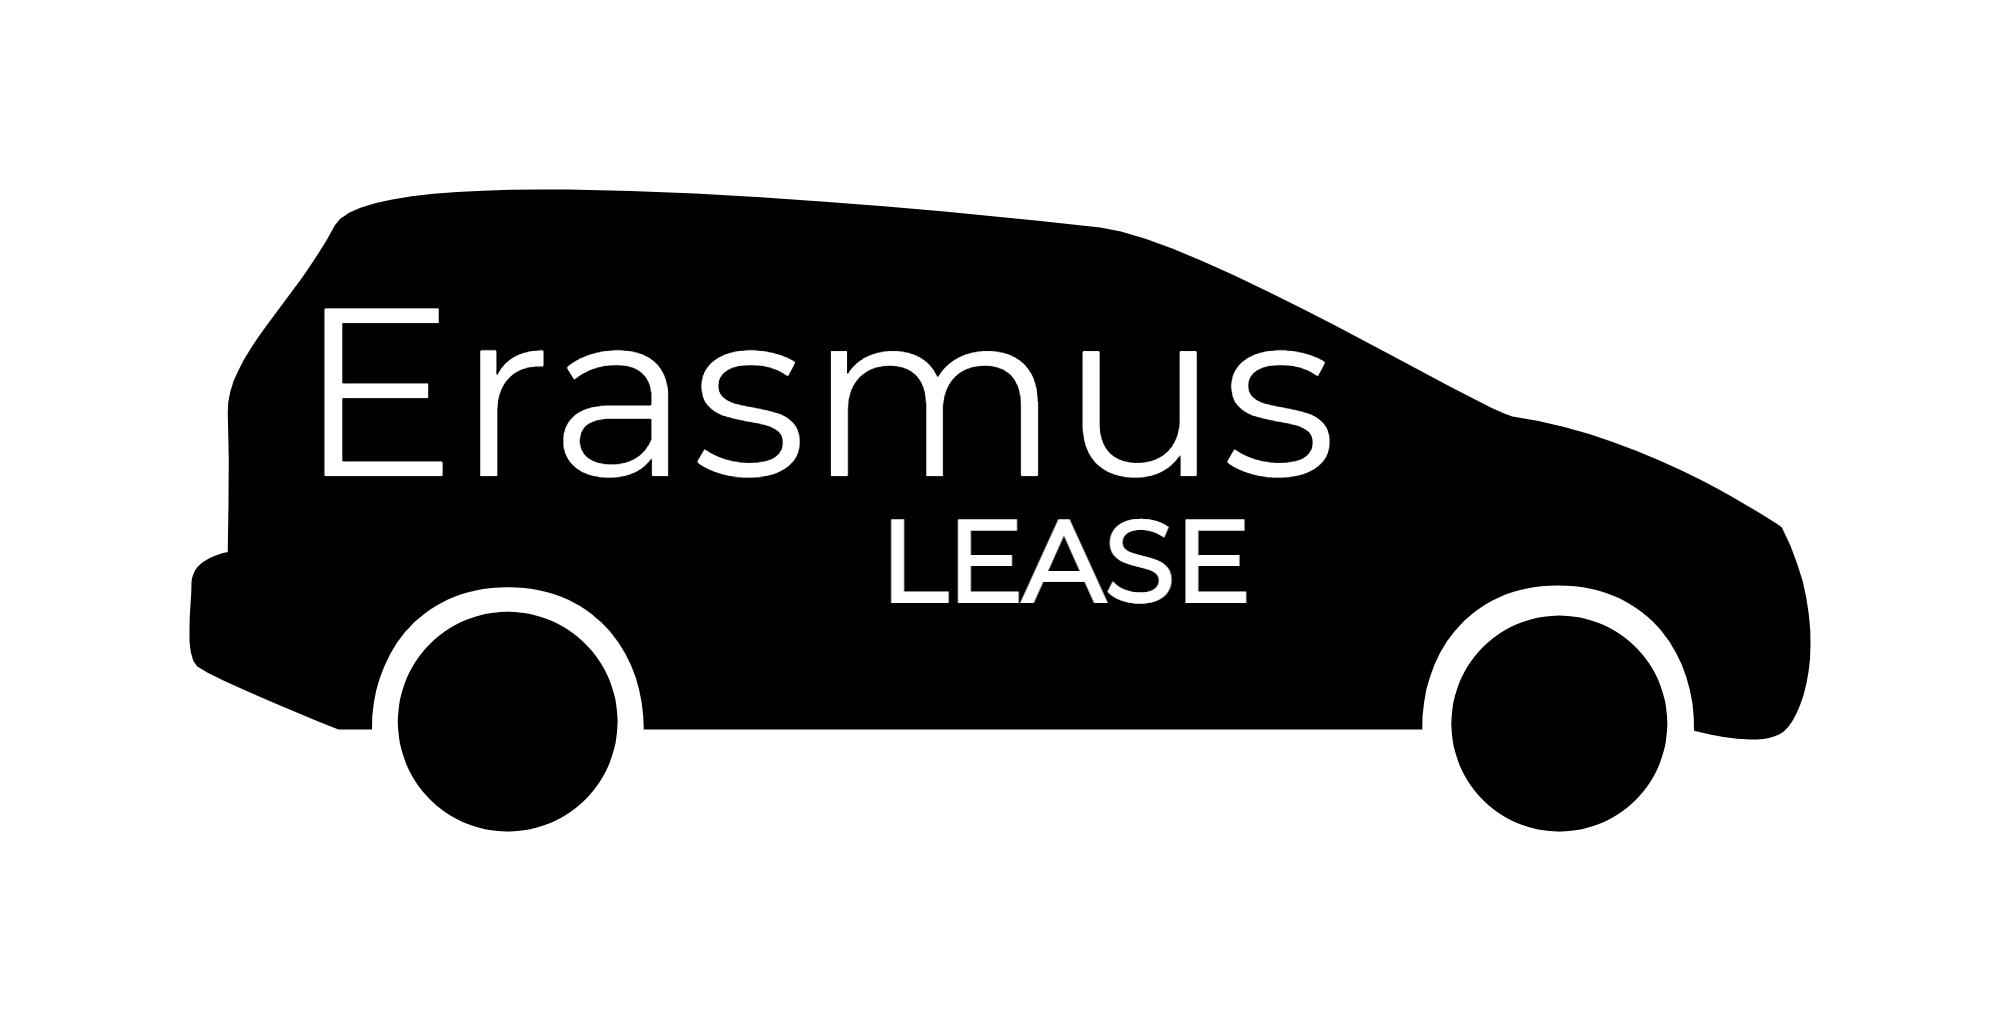 Erasmus Lease